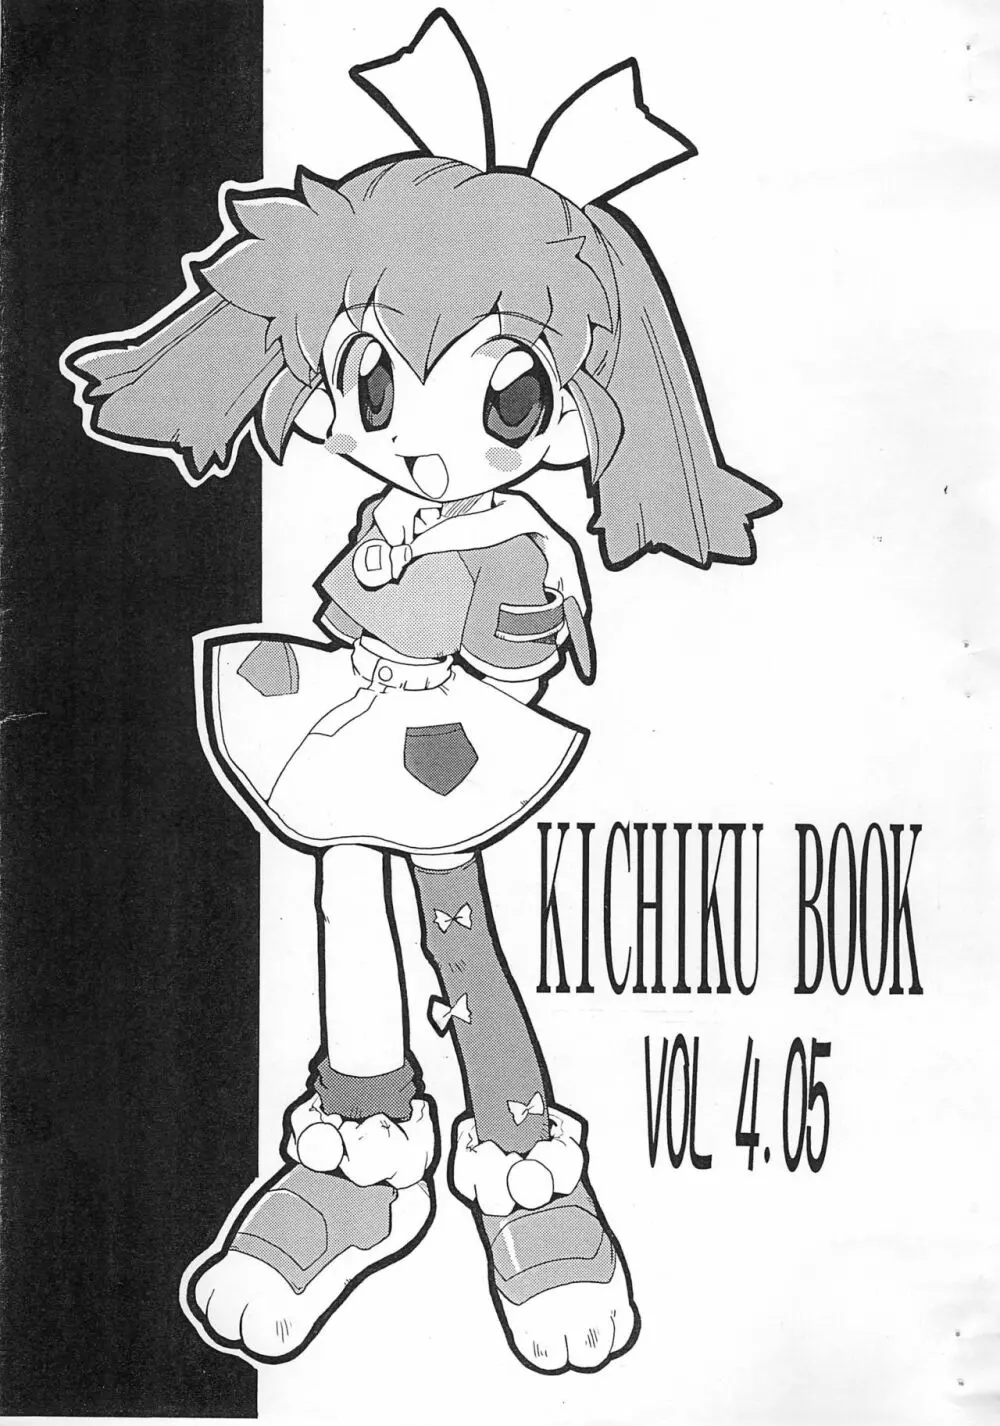 KICHIKU BOOK VOL4.05